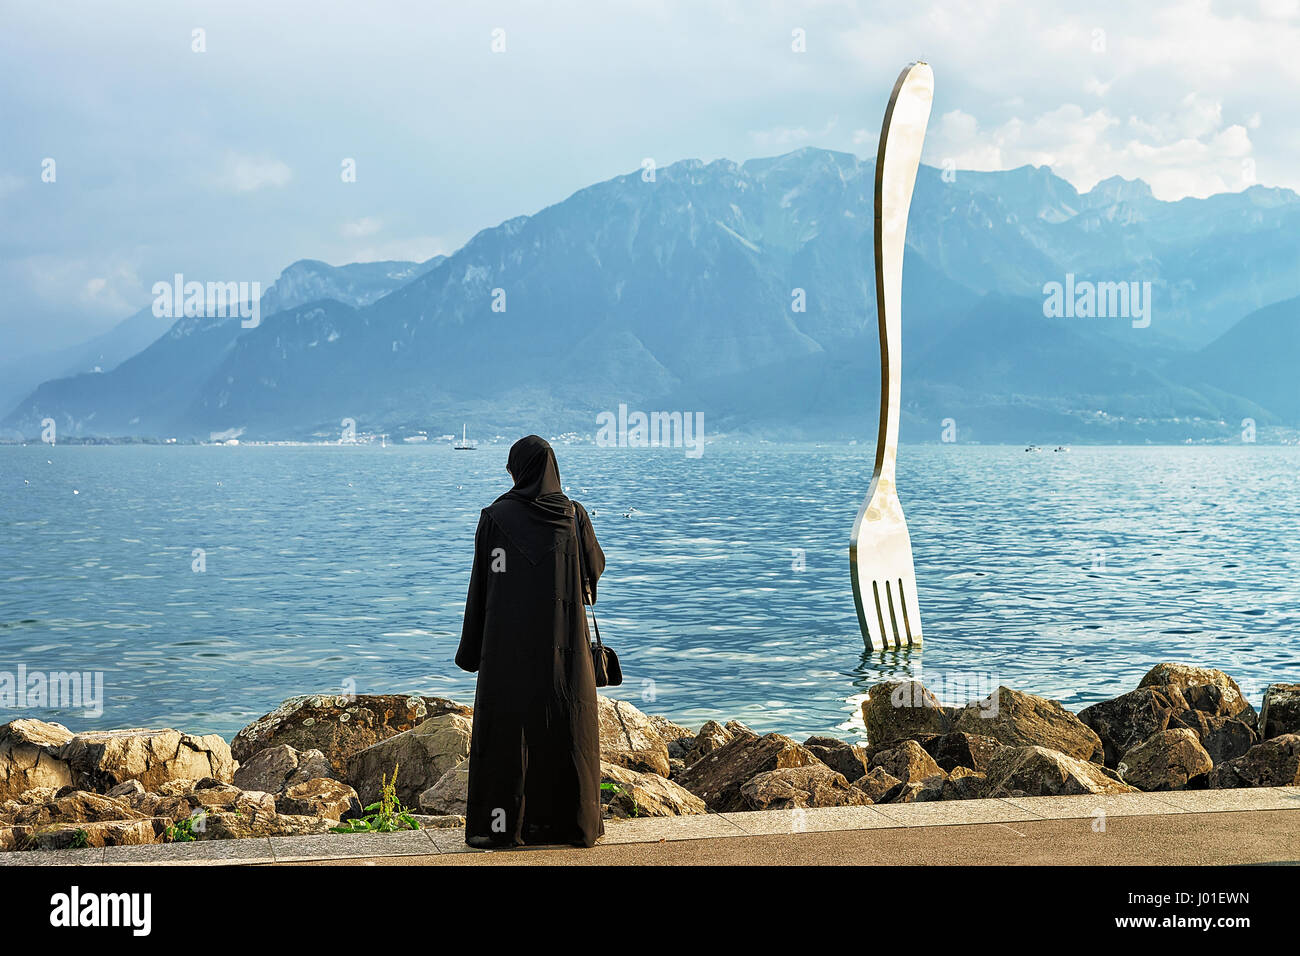 Vevey, Switzerland - August 27, 2016: Muslim woman in black burqa in Fork sculpture at Geneva Lake in Vevey, Vaud canton, Switzerland. Alps mountains  Stock Photo